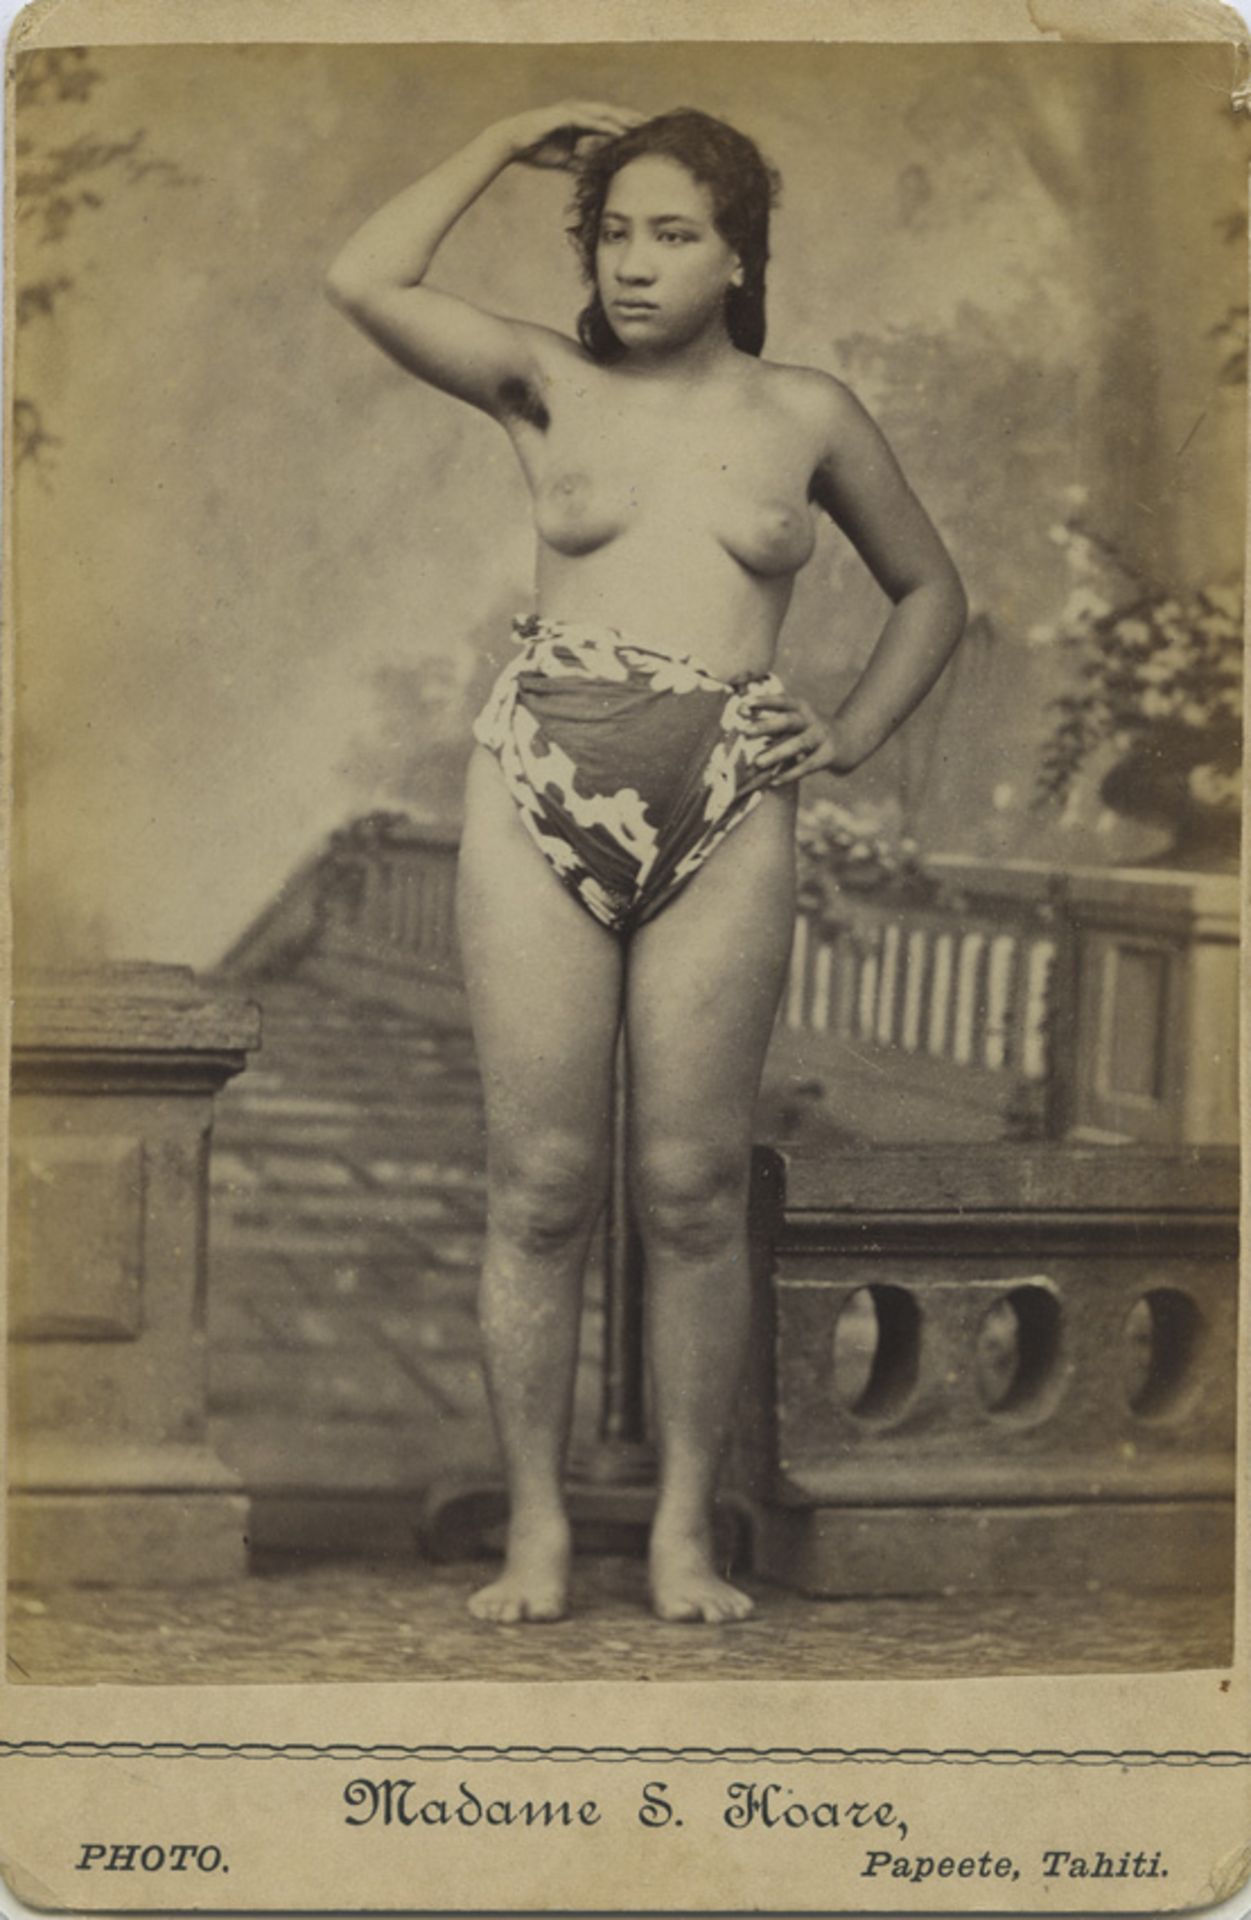 Madame S. HOARE, Papeete, Tahiti. Jeune Tahitienne en studio, devant une toile [...]